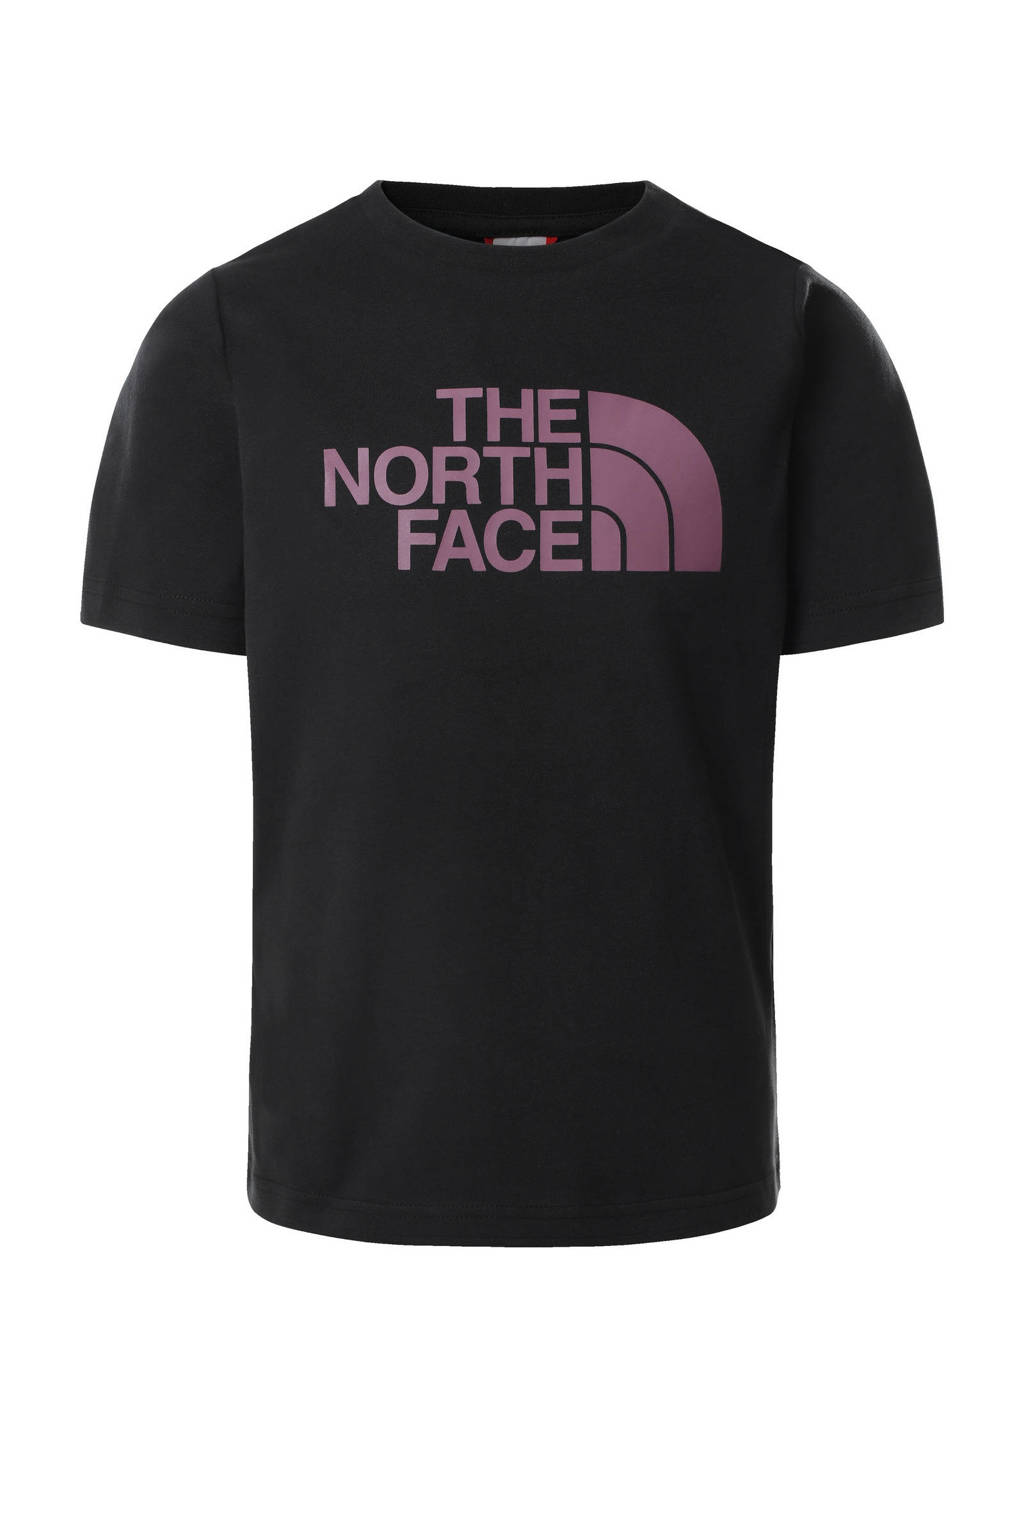 The North Face T-shirt Easy Boyfriend zwart/paars, Zwart/paars